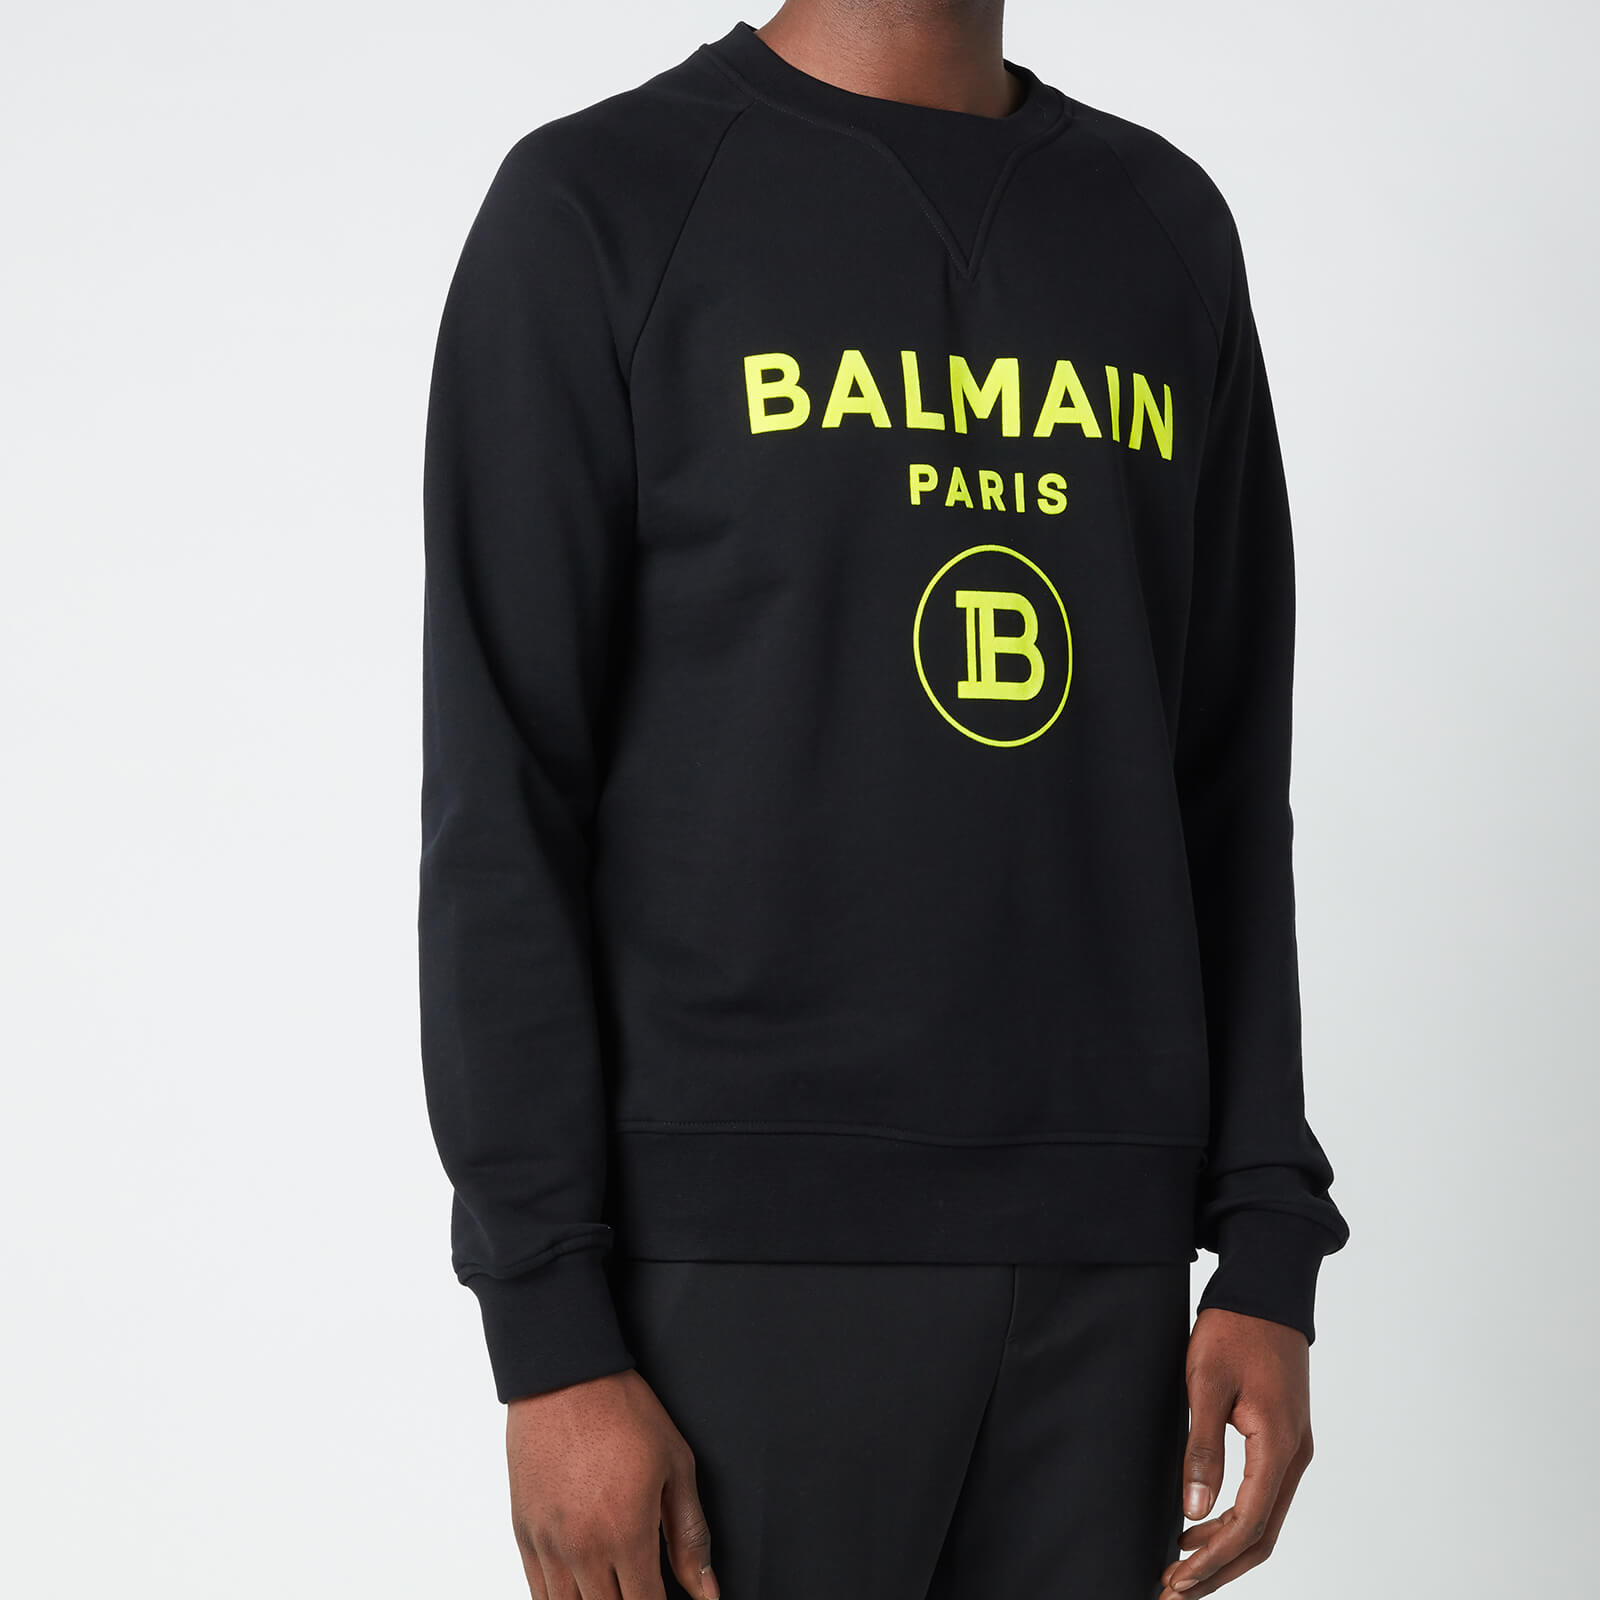 Balmain Men's Flock Sweatshirt - Black/Yellow - L